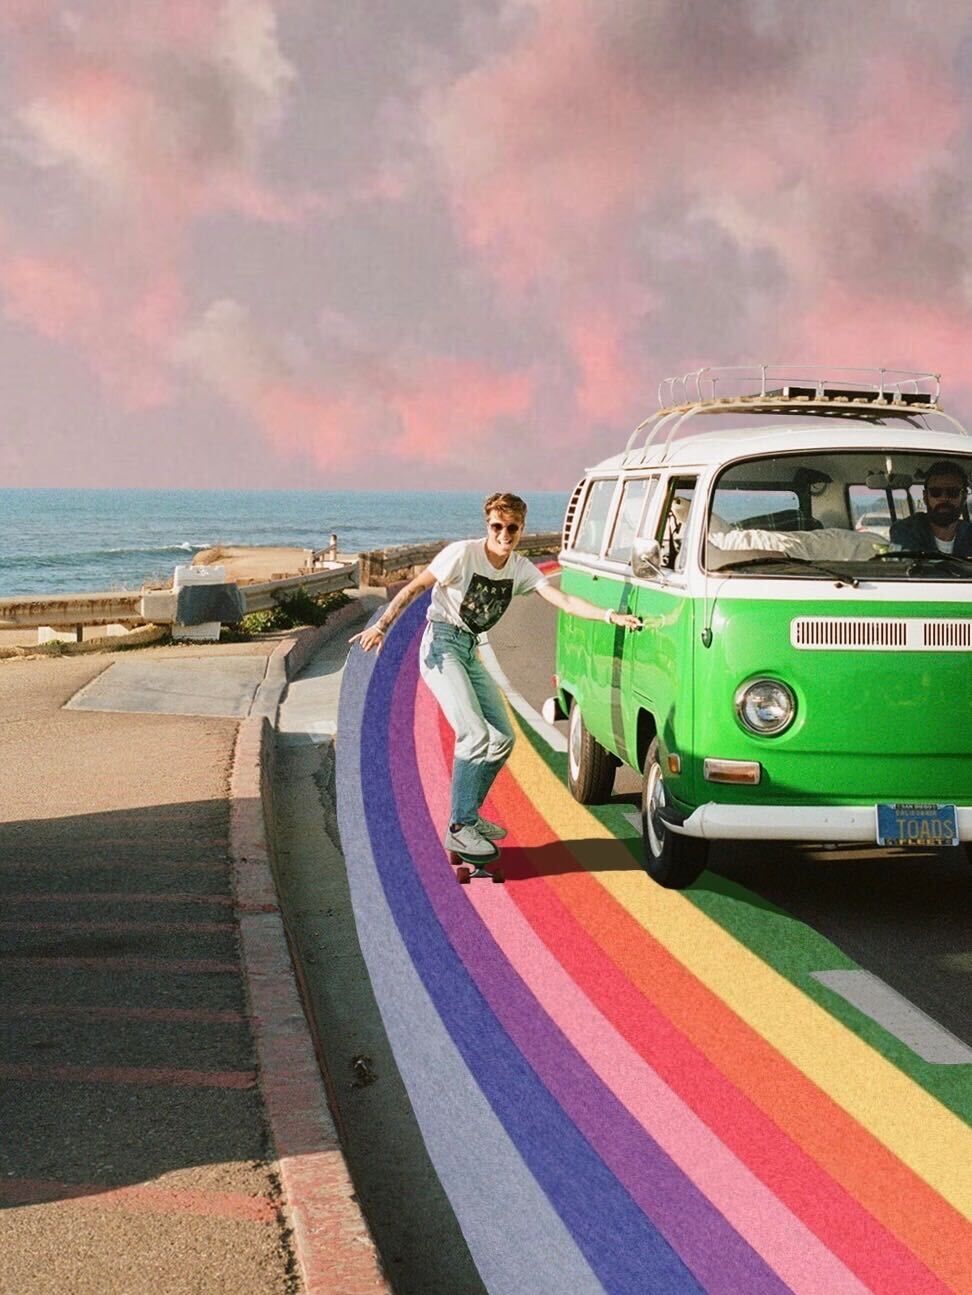 nikki hiltz skateboards on a rainbow painted road while holding onto a green van along te van